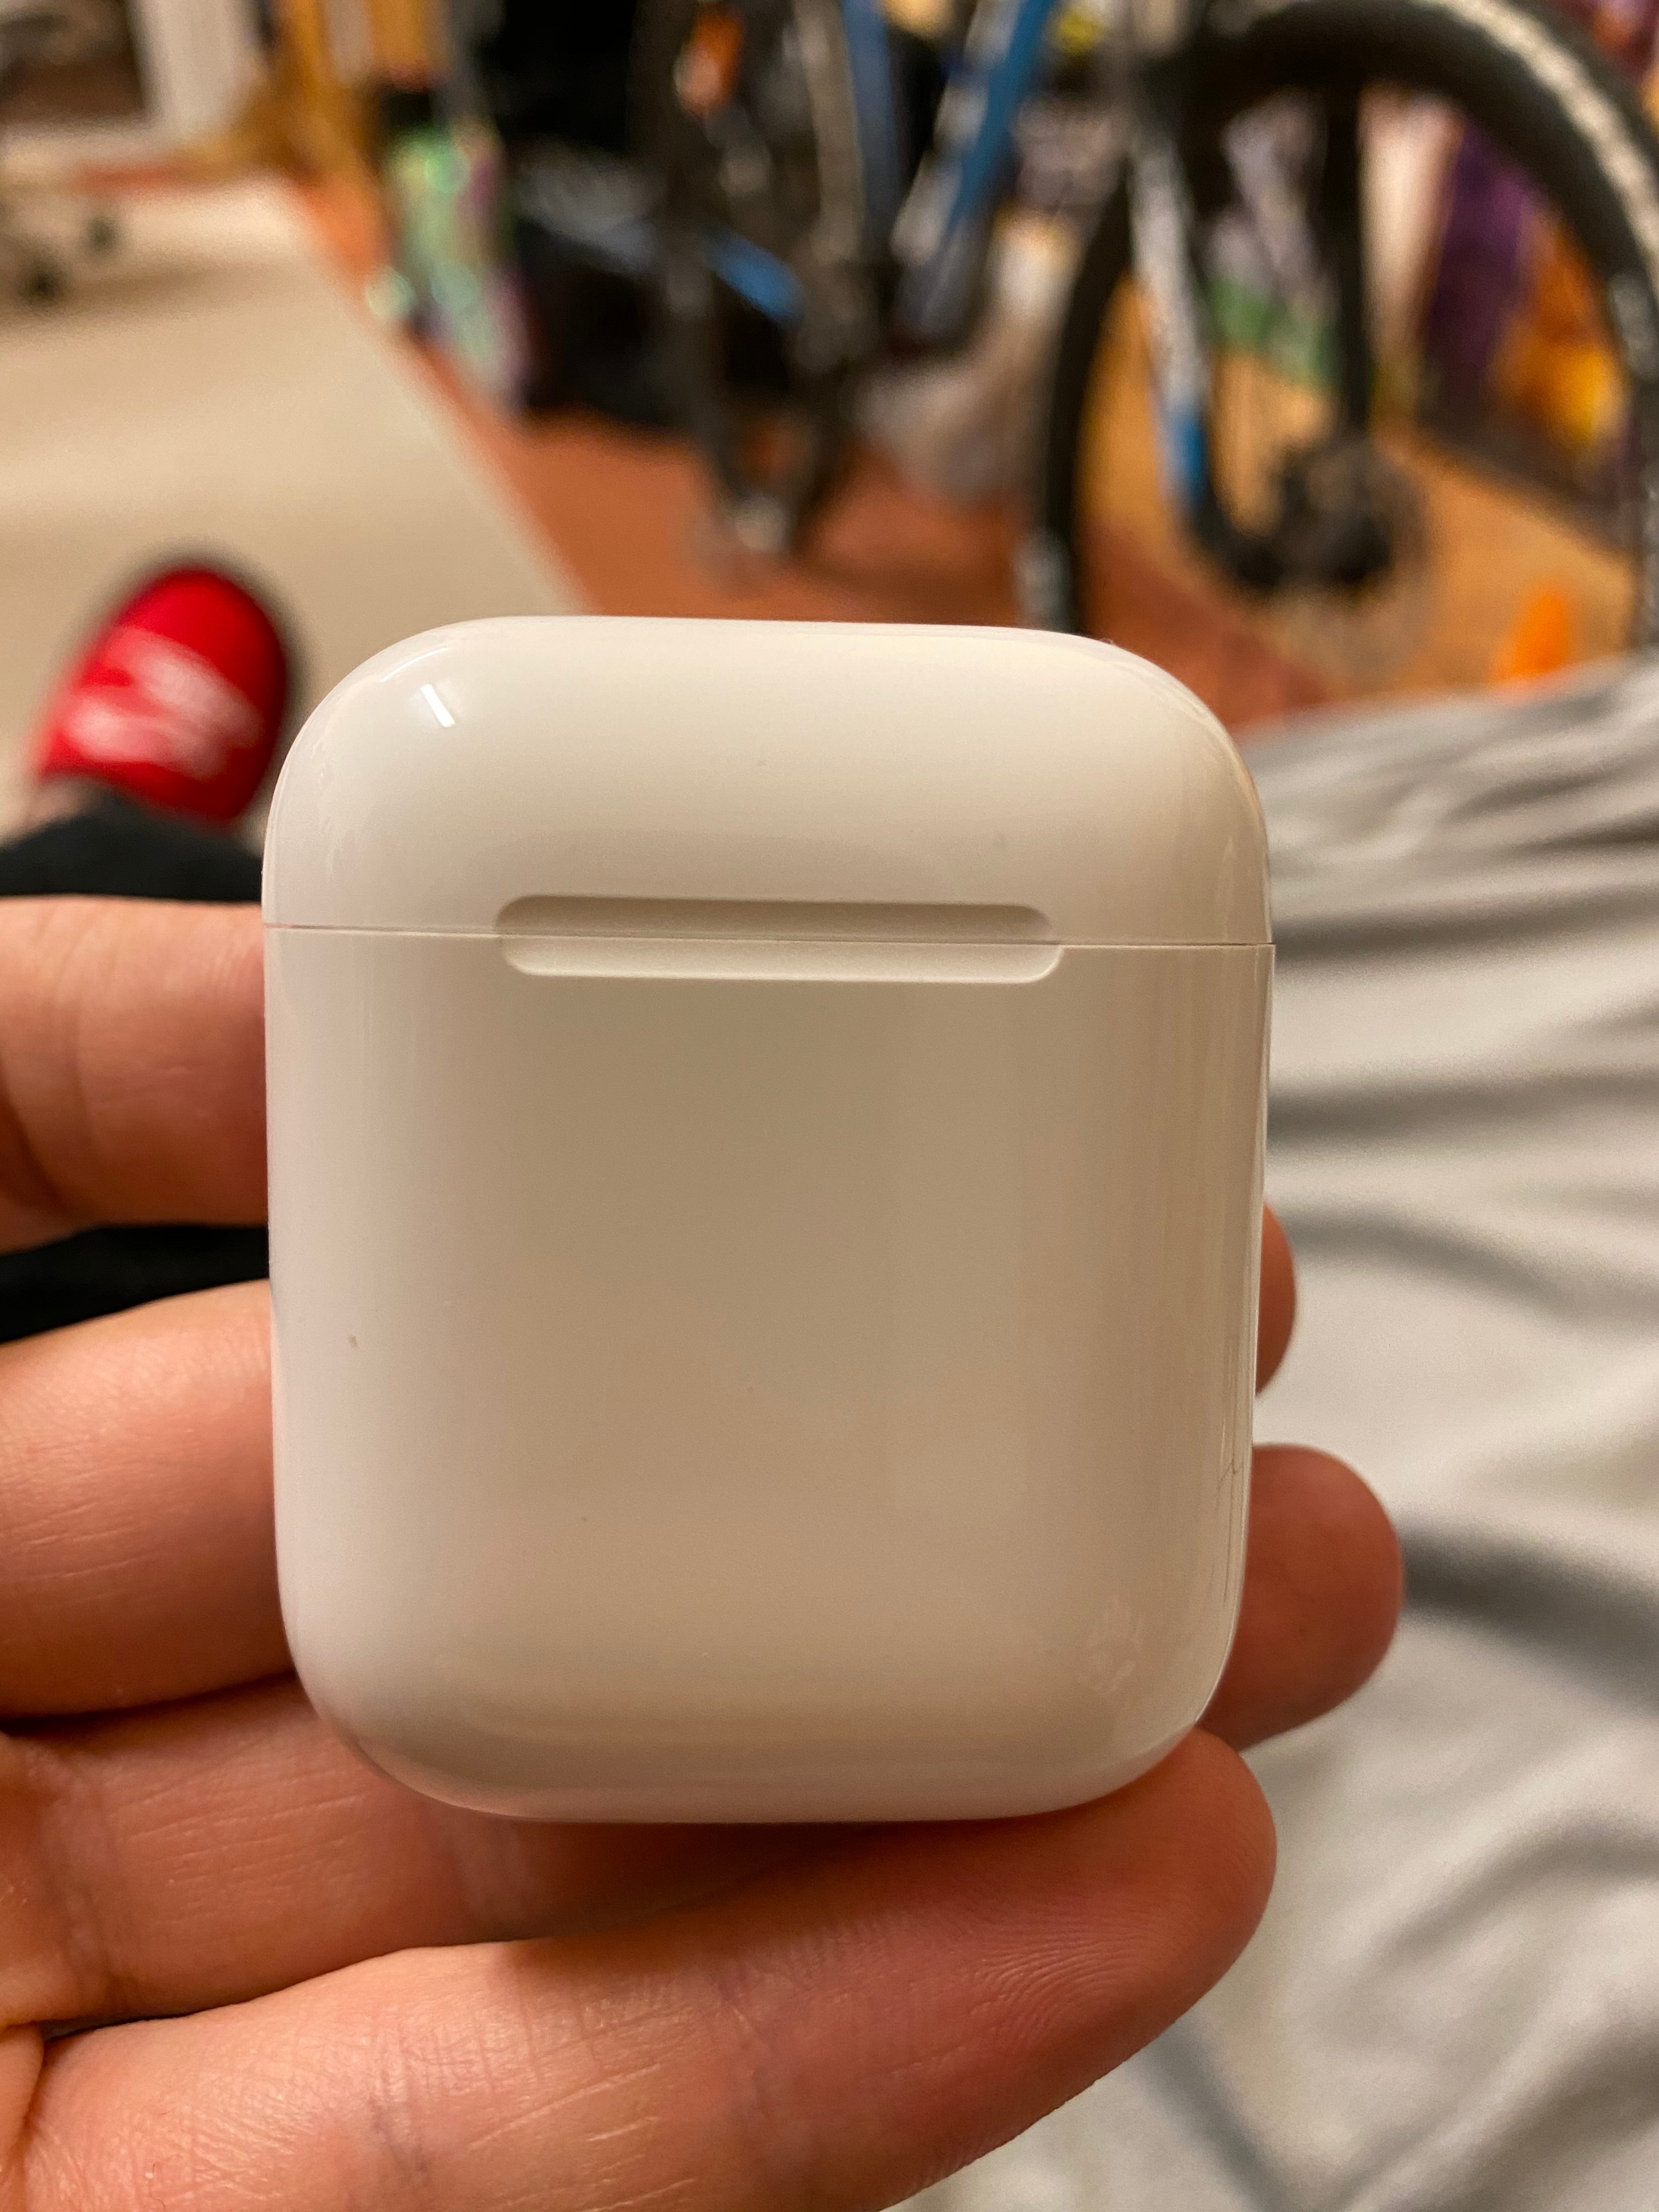 Airpod case - Apple Community